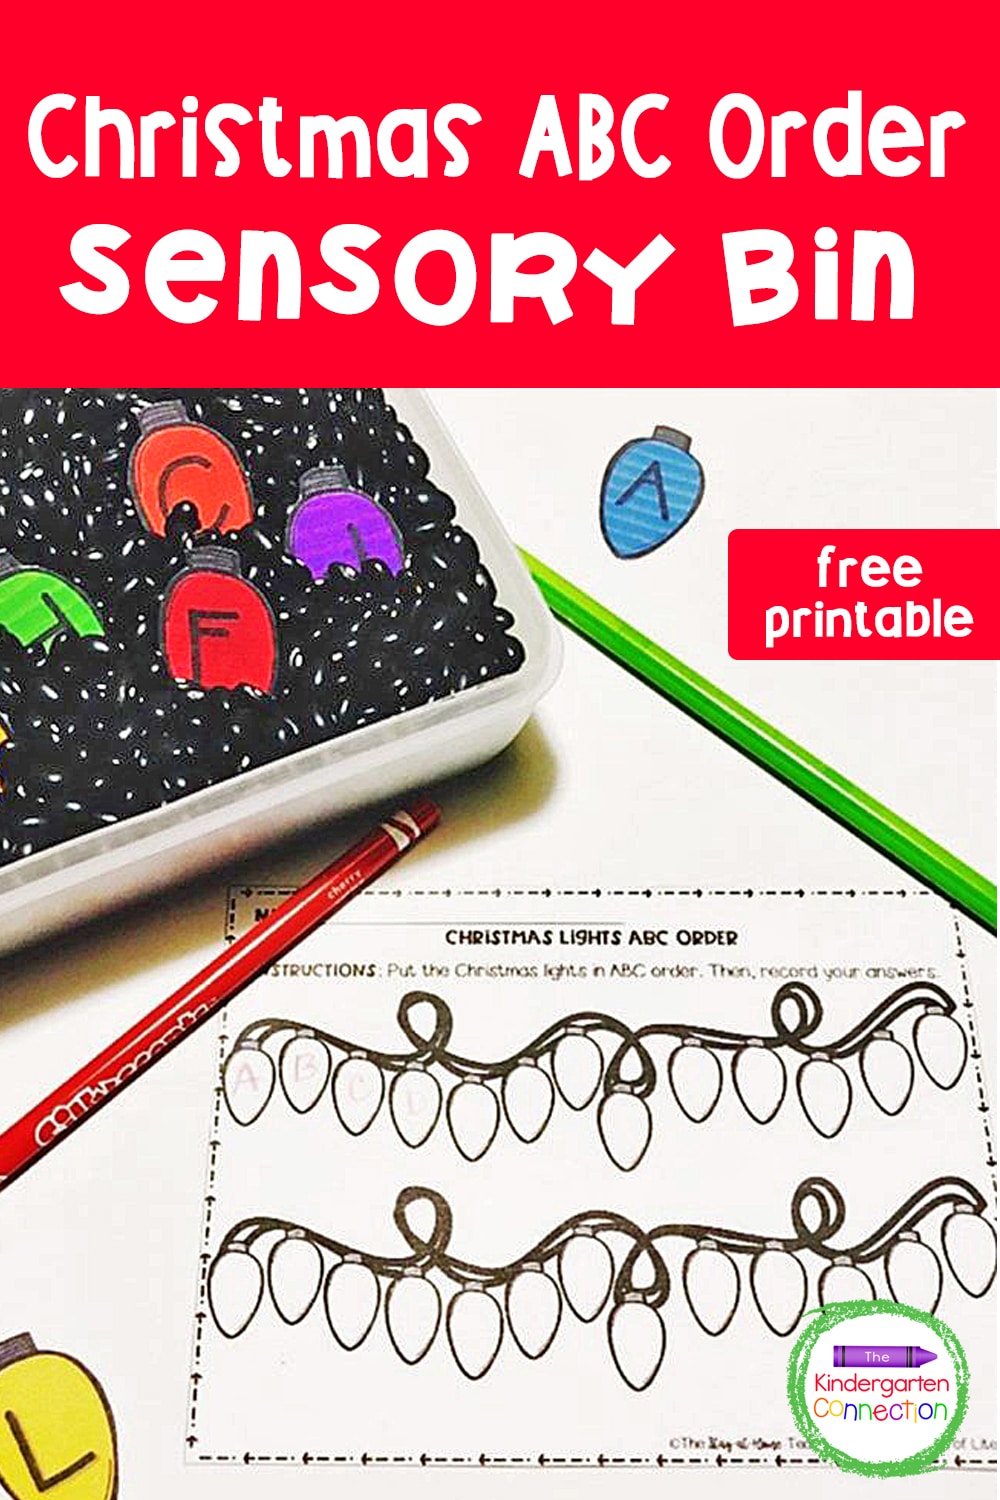 FREE Christmas Lights ABC Order Sensory Bin Printables for Kindergarten!